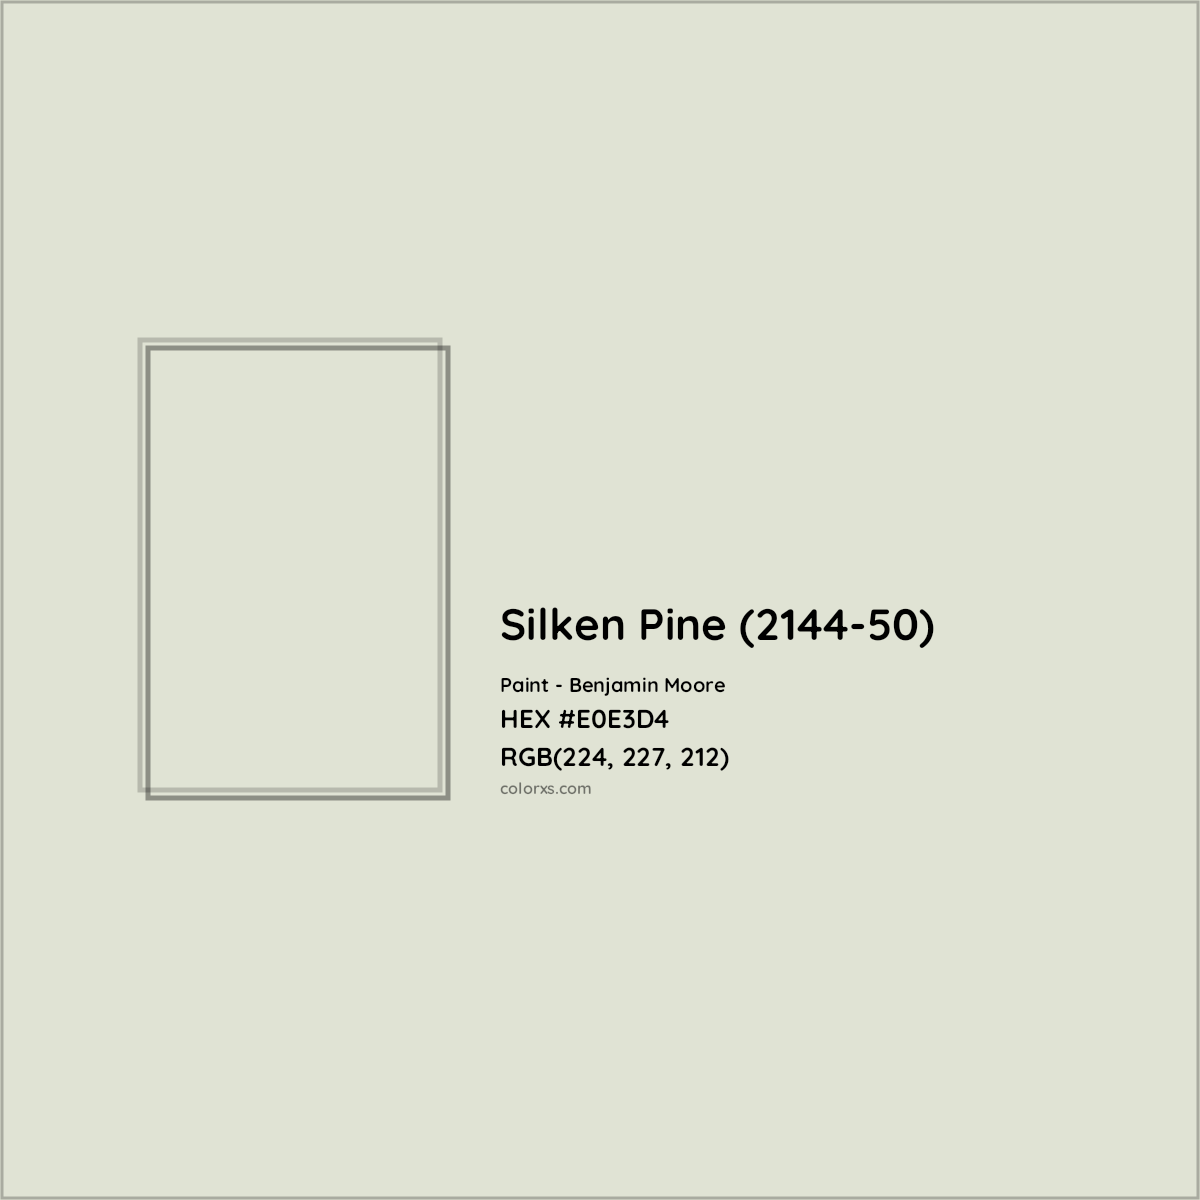 HEX #E0E3D4 Silken Pine (2144-50) Paint Benjamin Moore - Color Code